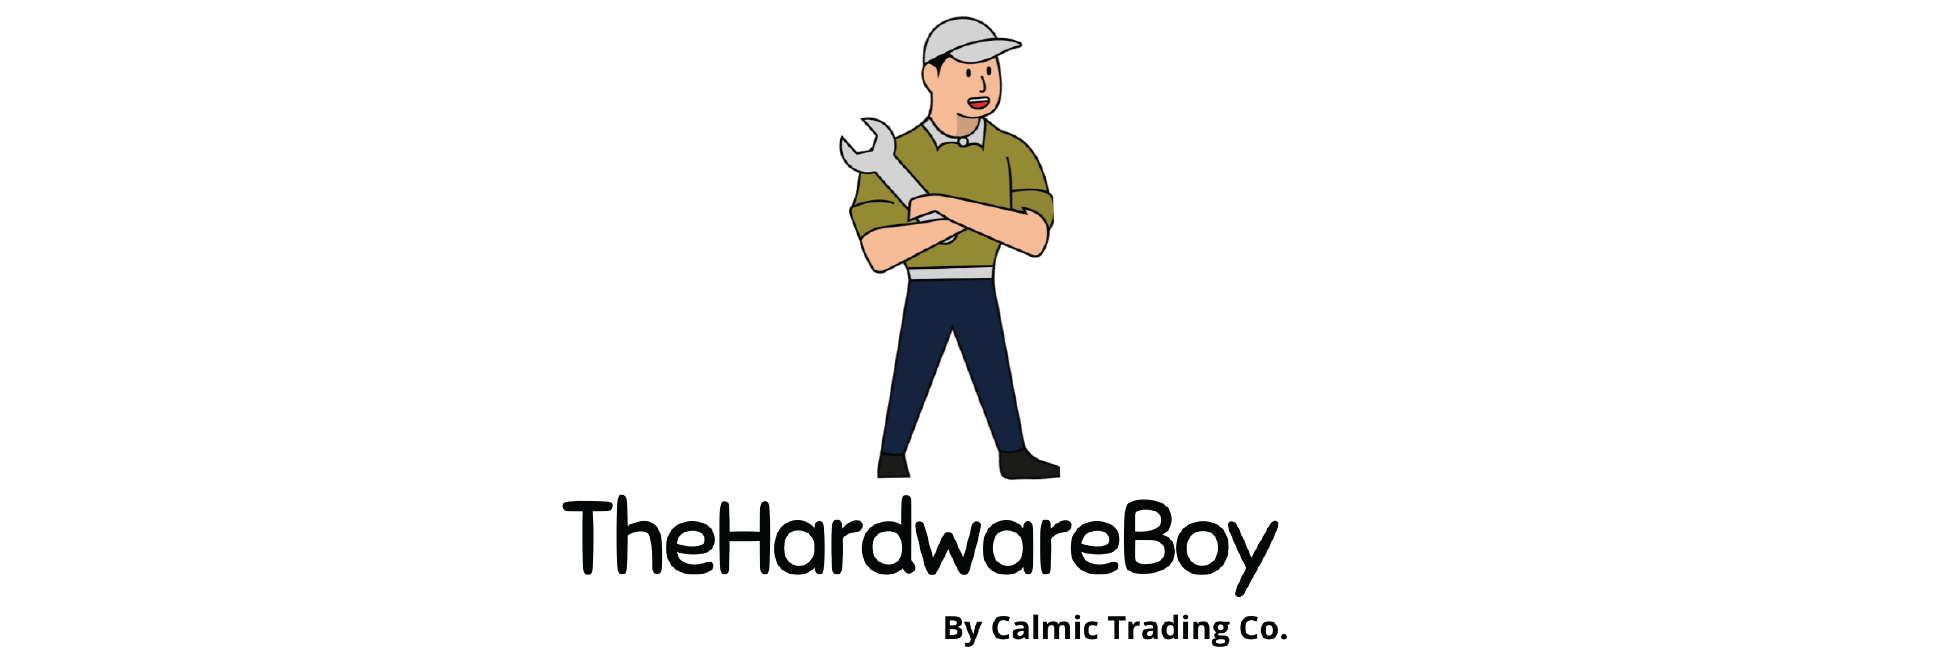 TheHardwareBoy Logo